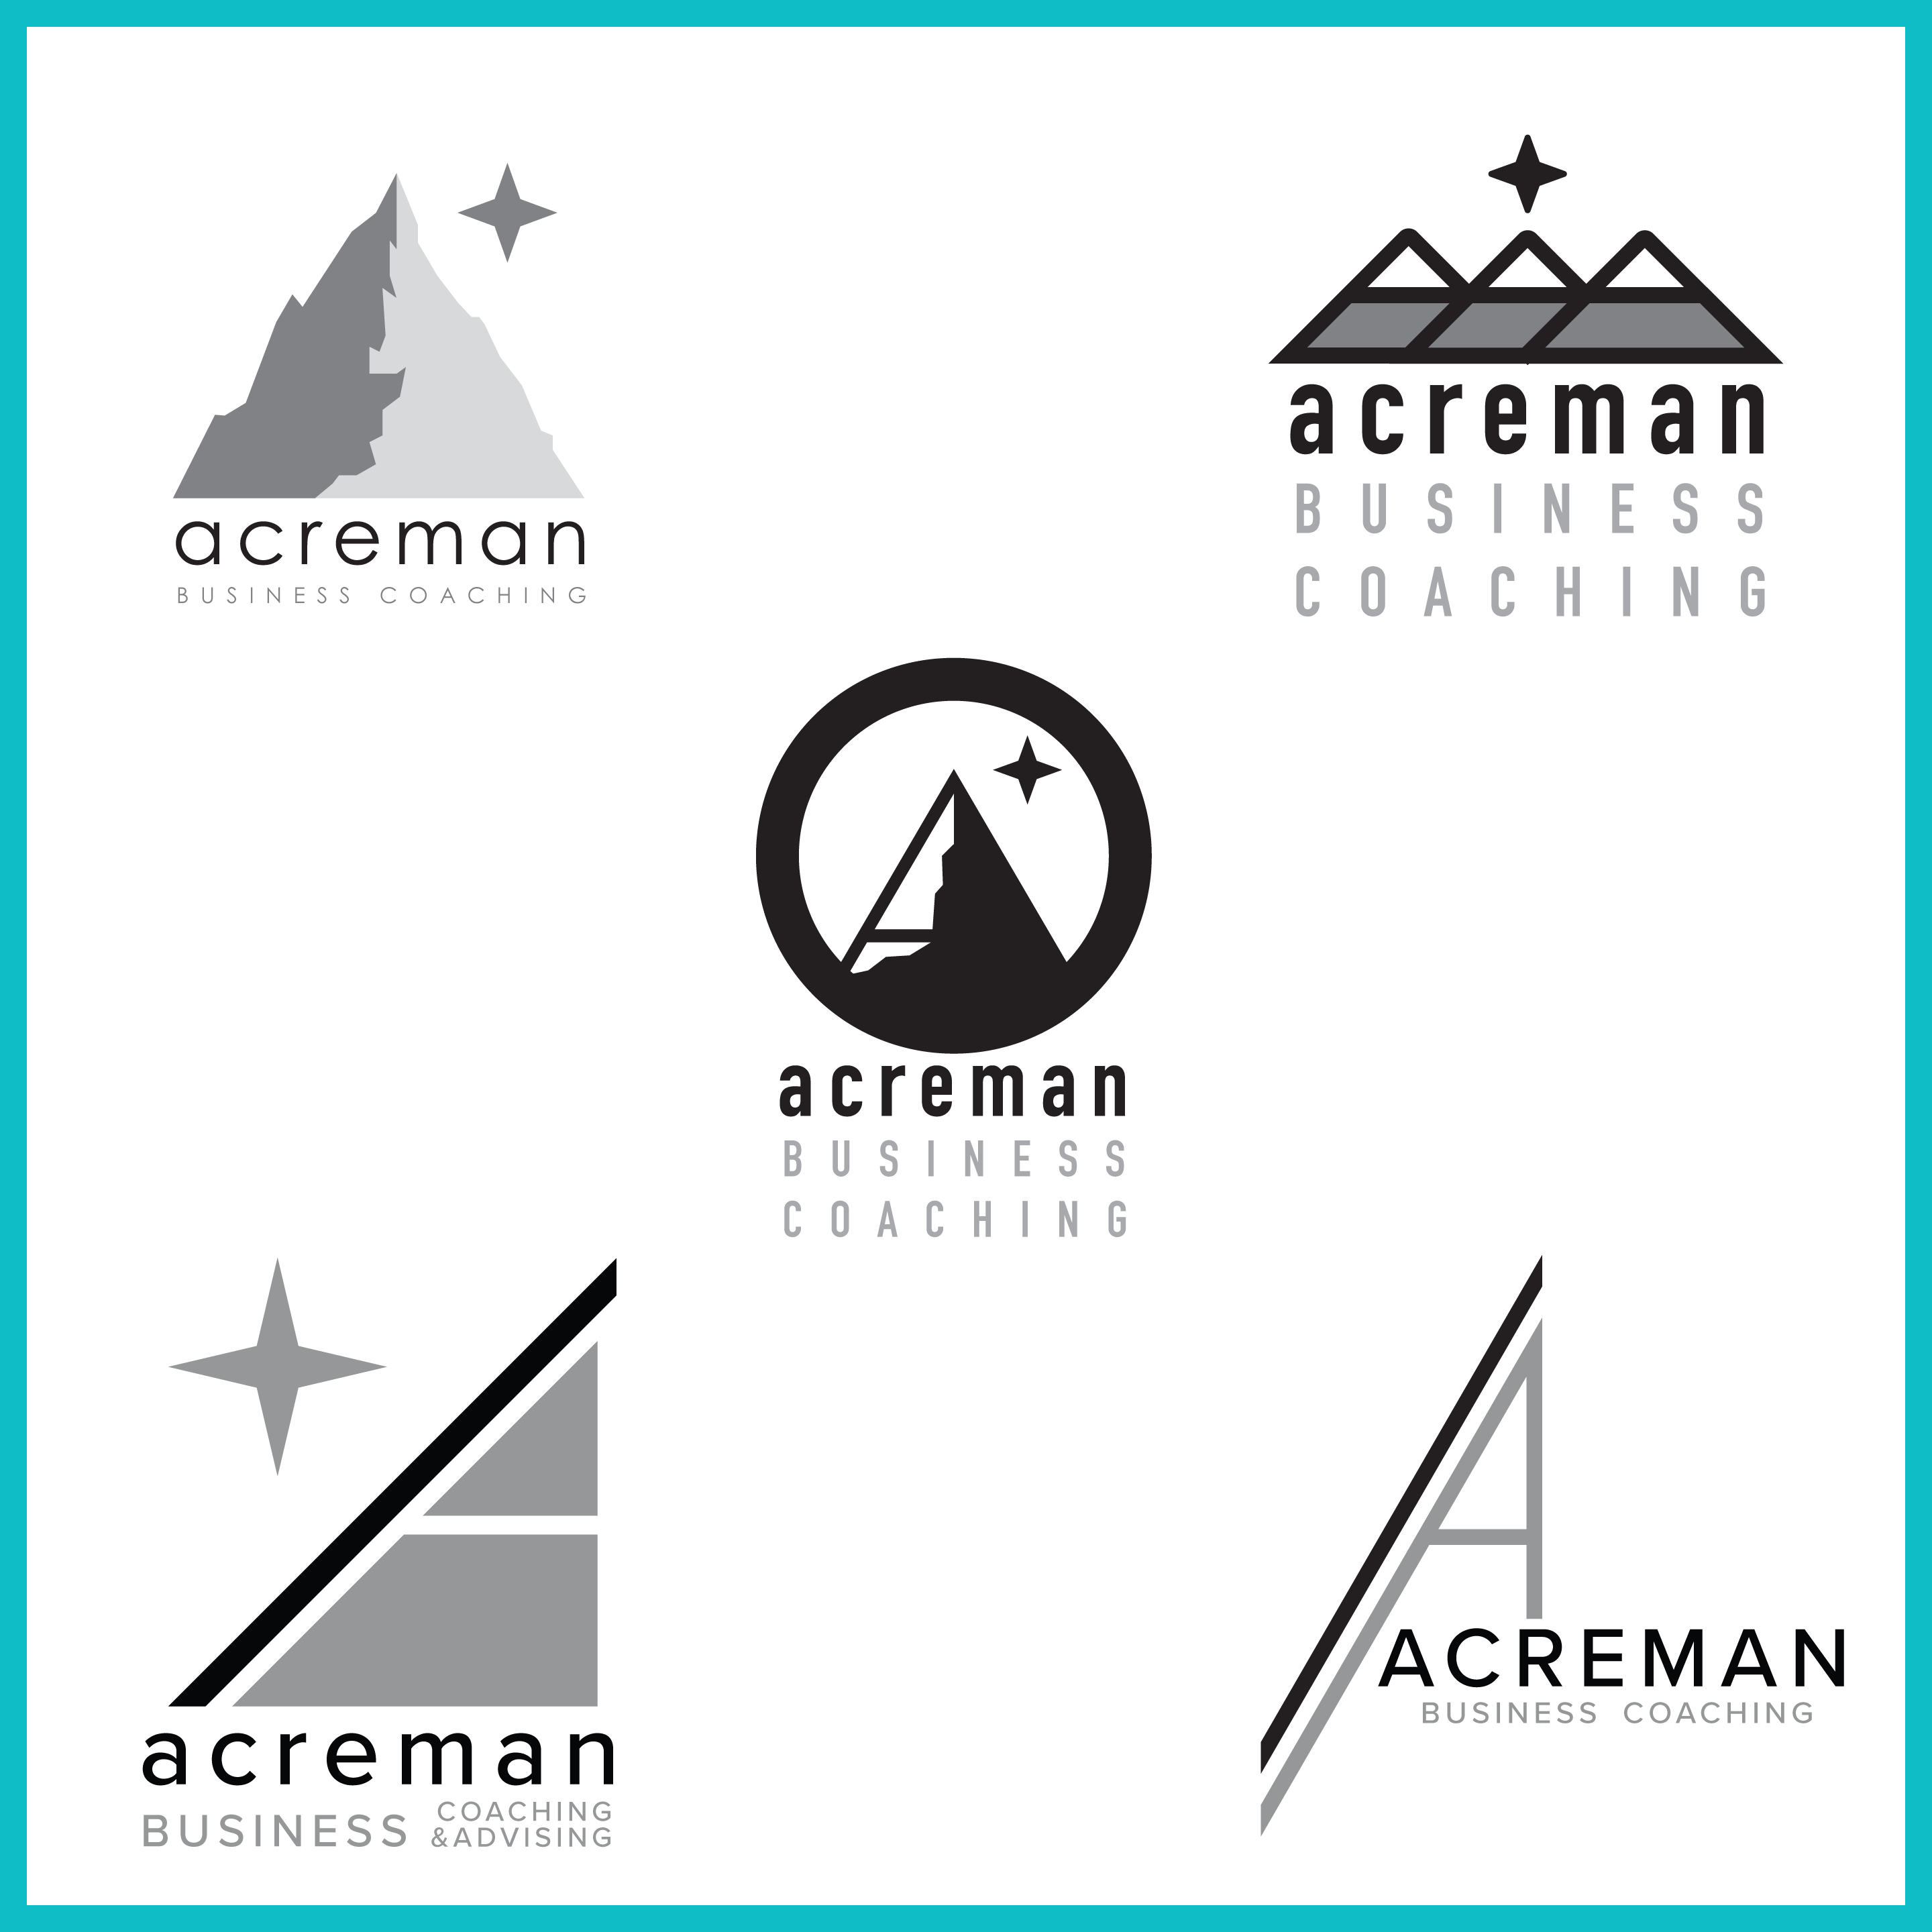 Acreman logo candidates